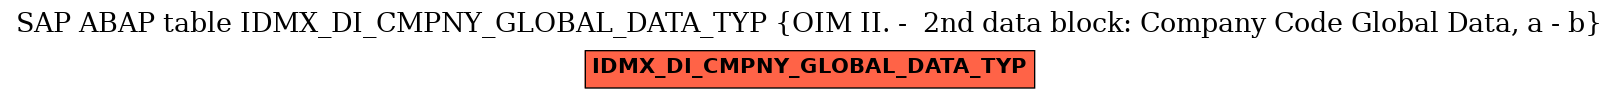 E-R Diagram for table IDMX_DI_CMPNY_GLOBAL_DATA_TYP (OIM II. -  2nd data block: Company Code Global Data, a - b)